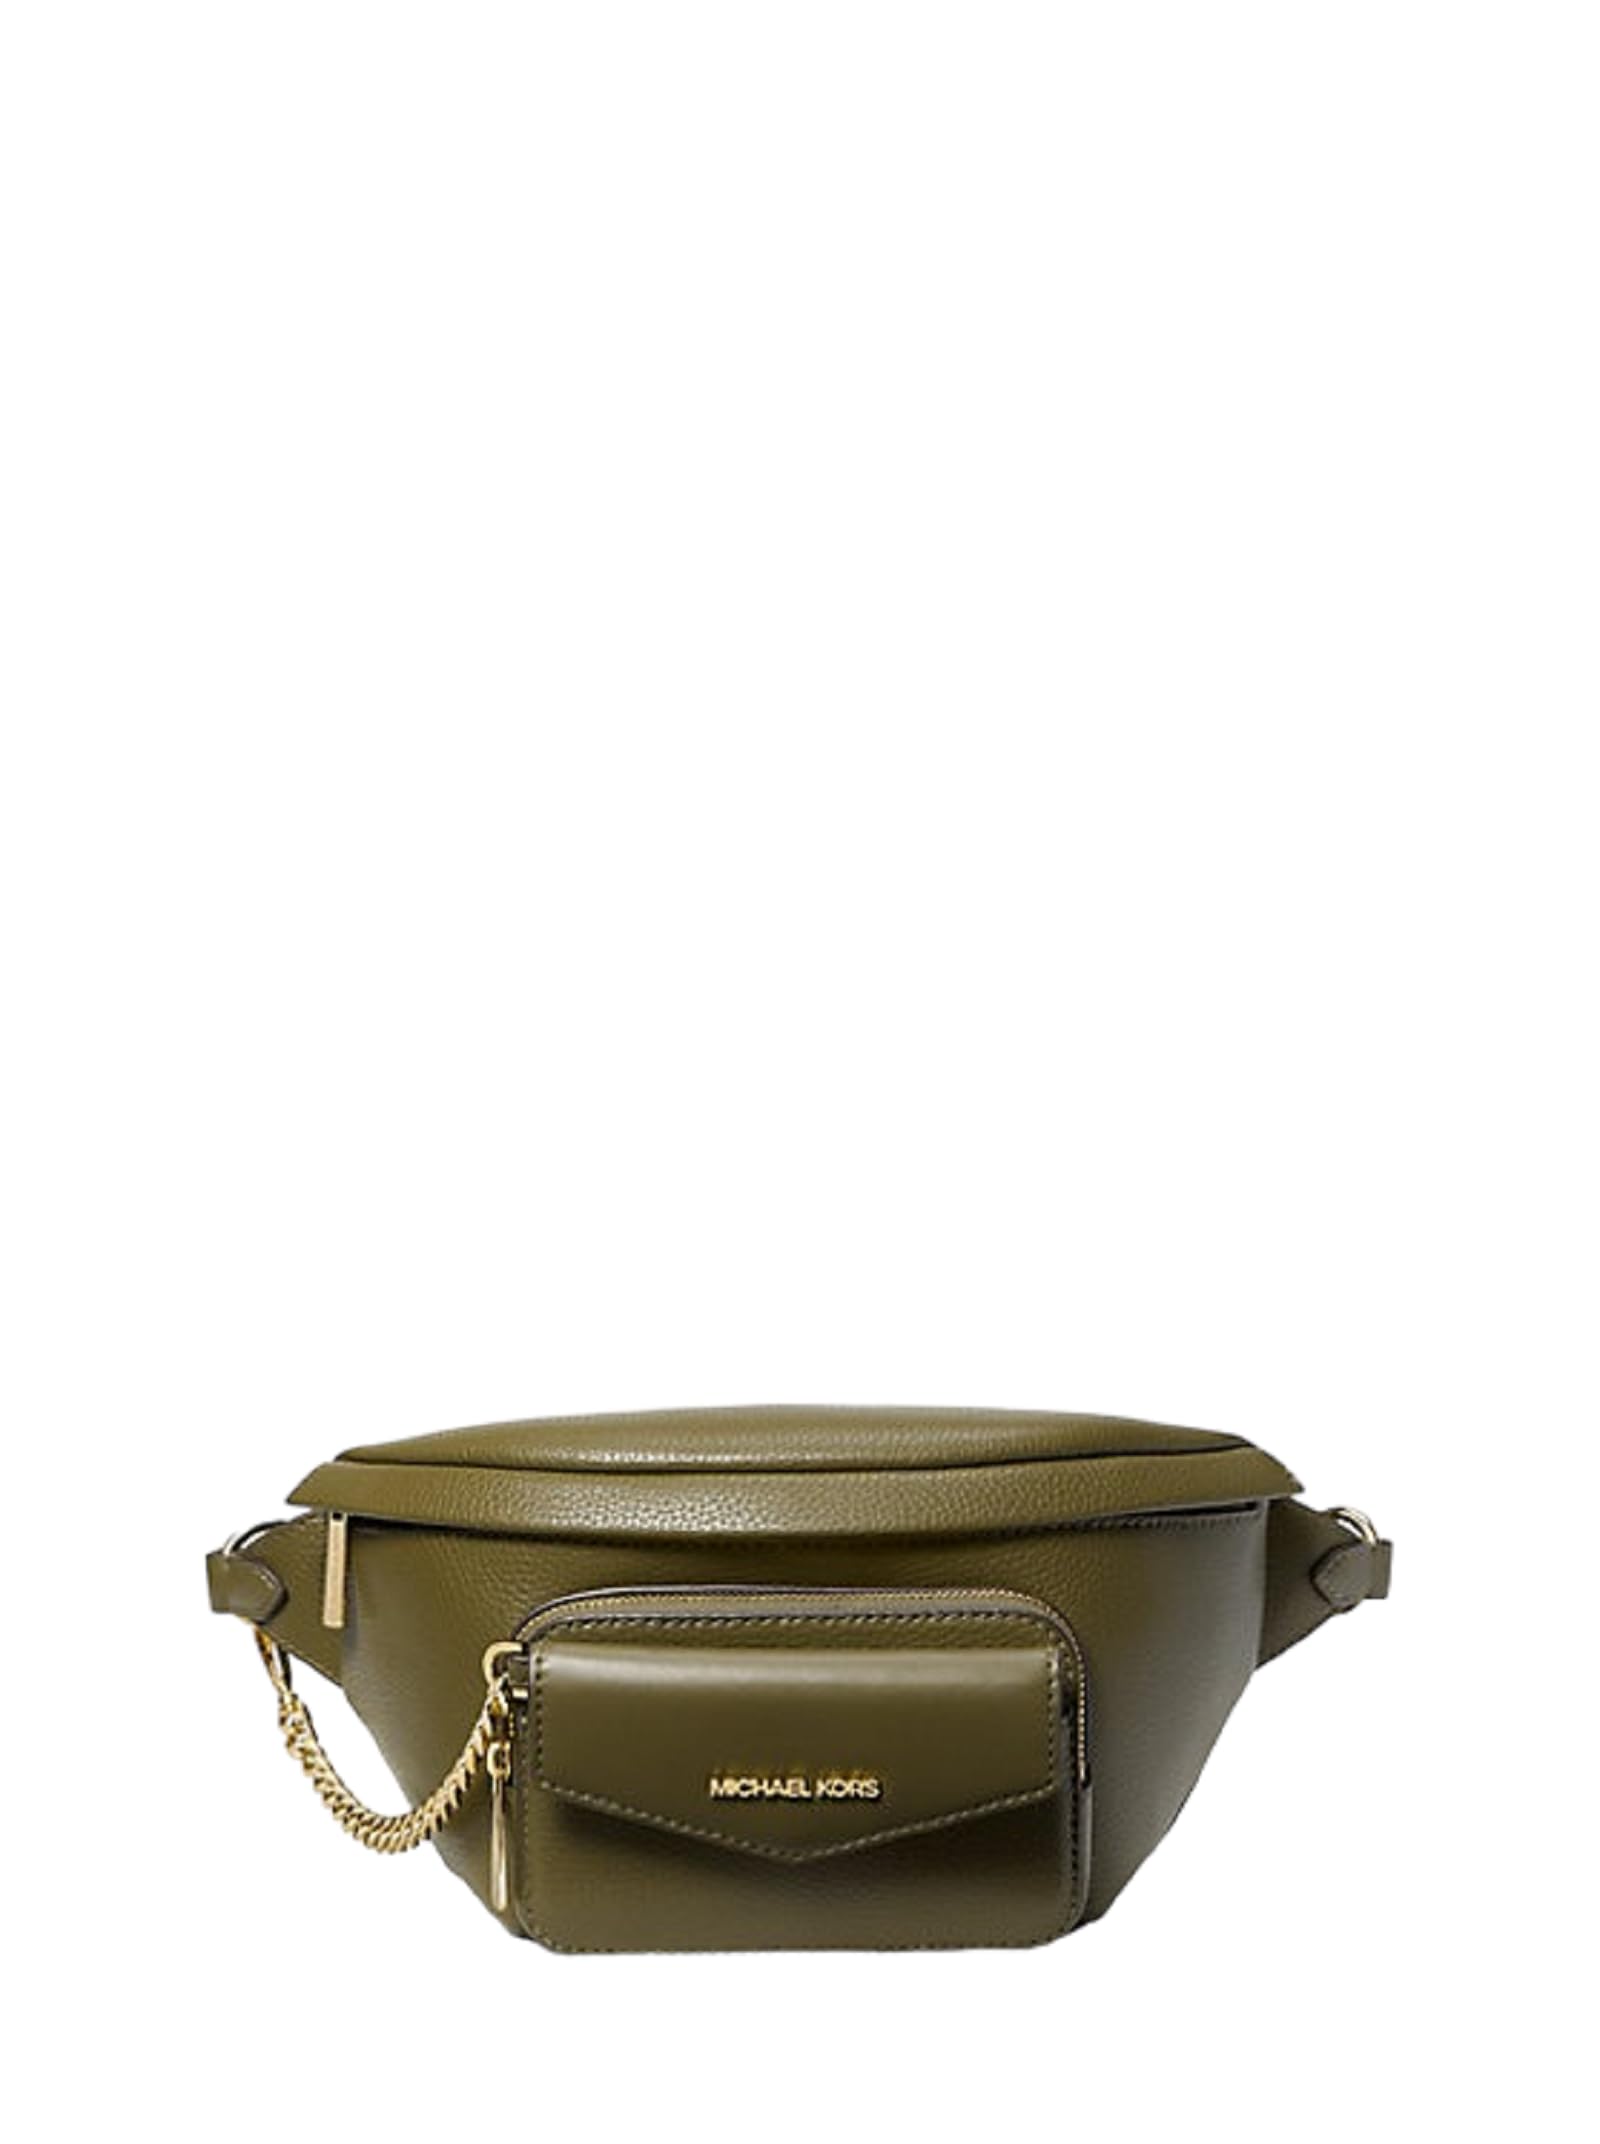 MICHAEL KORS Maisie Large Pebbled Leather 2 in 1 Sling Pack Waist Belt Bag Crossbody Strap (Olive)